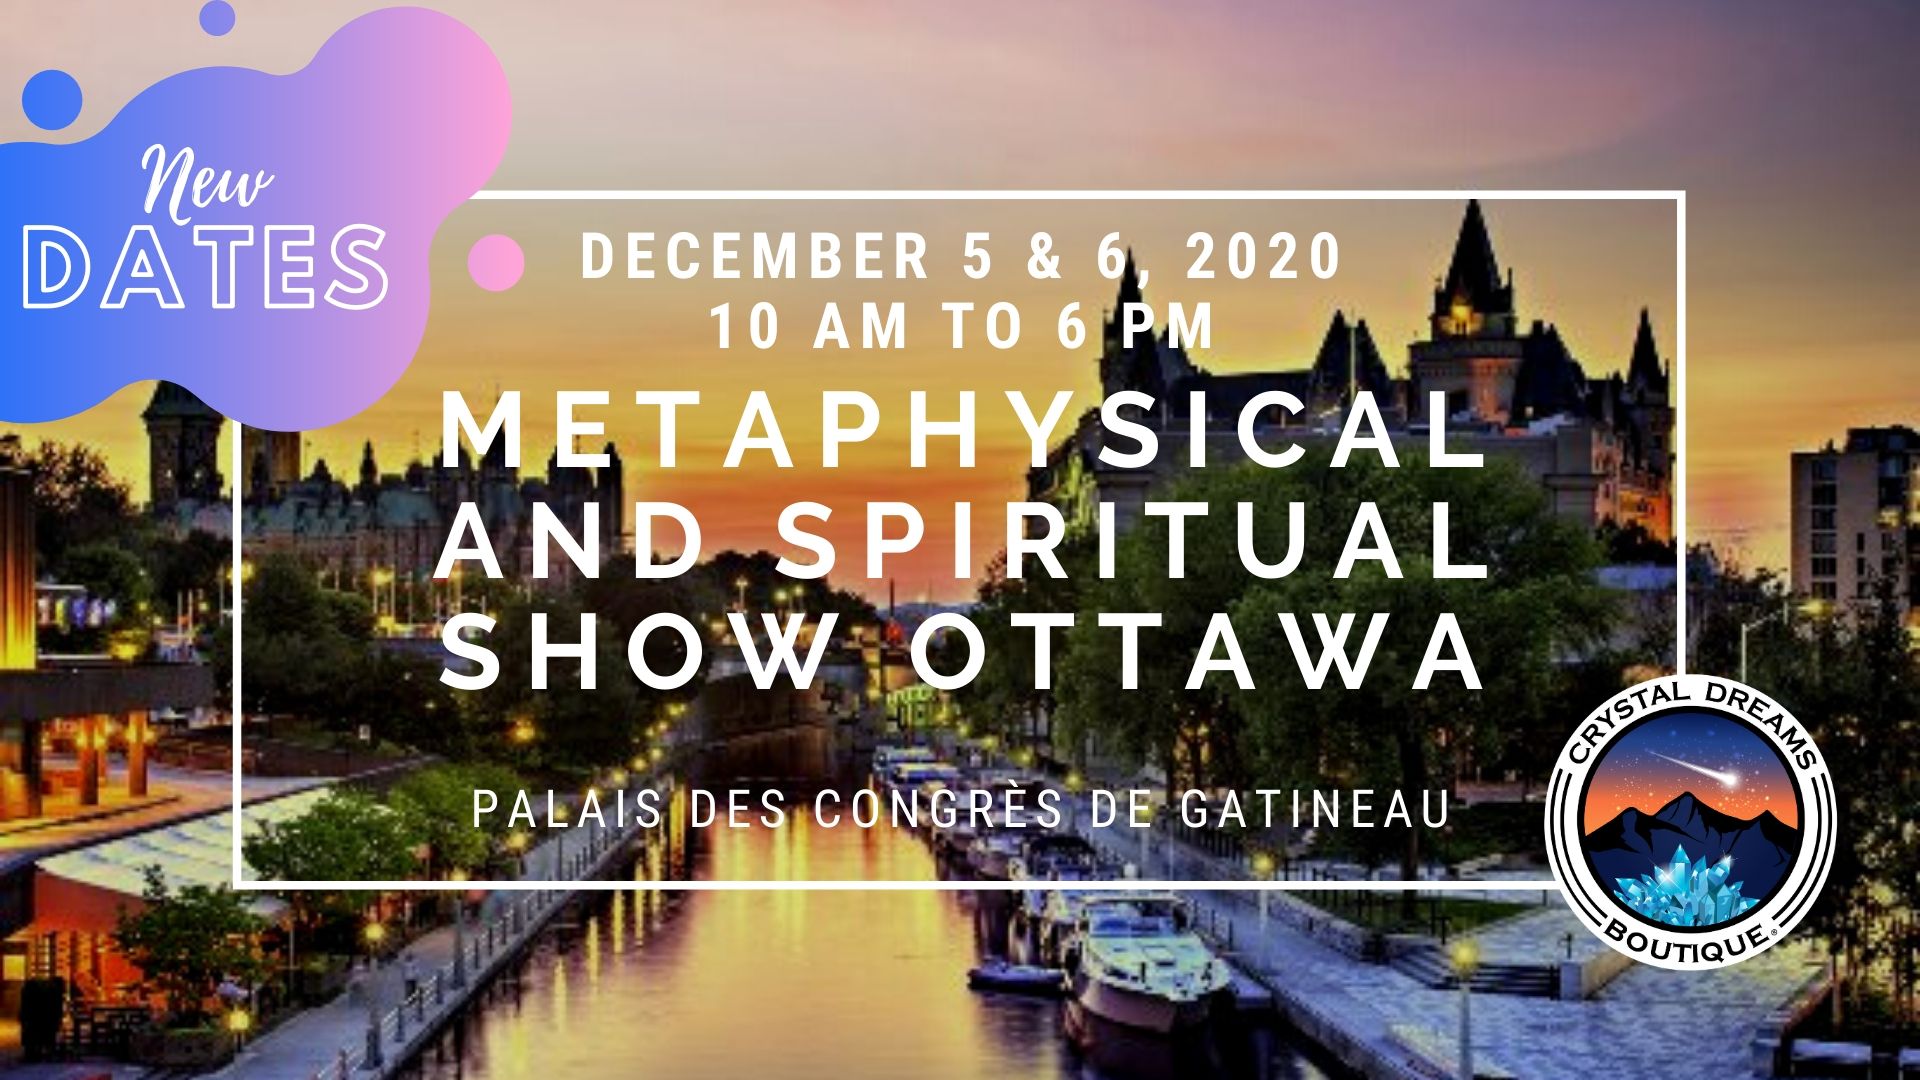 The Metaphysical and Spiritual Show of Ottawa / Gatineau Crystal